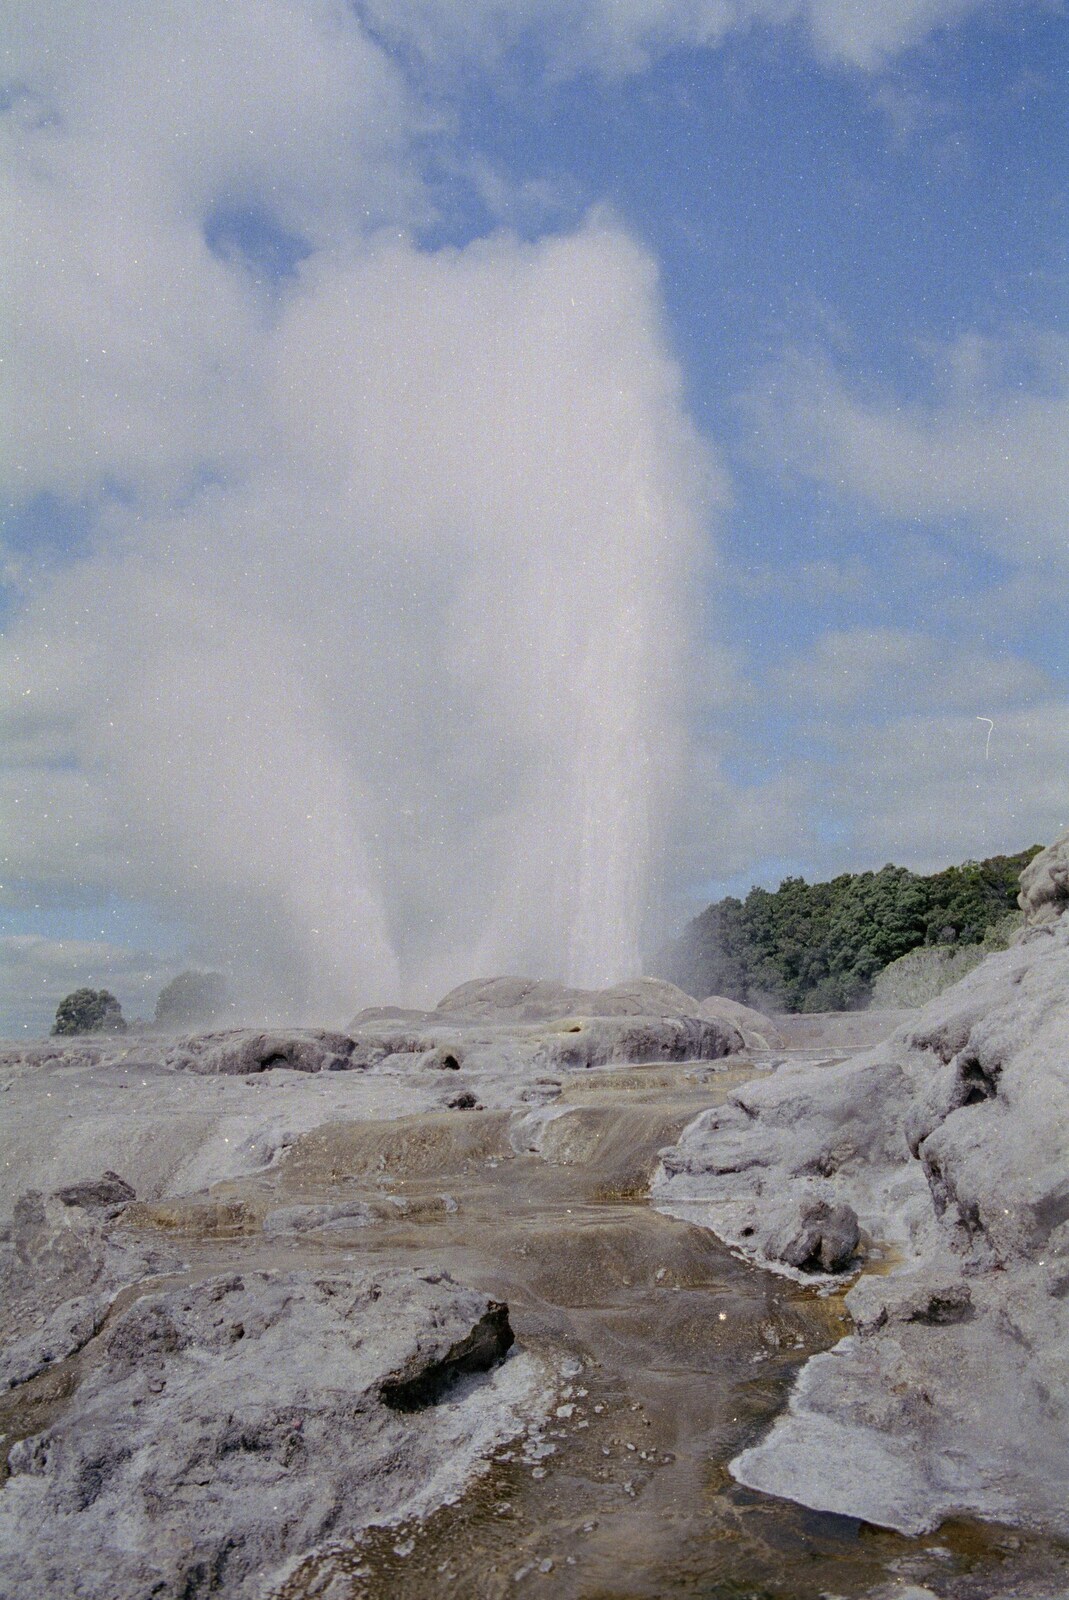 A geyser blows off from A Road-trip Through Rotorua to Palmerston, North Island, New Zealand - 27th November 1992